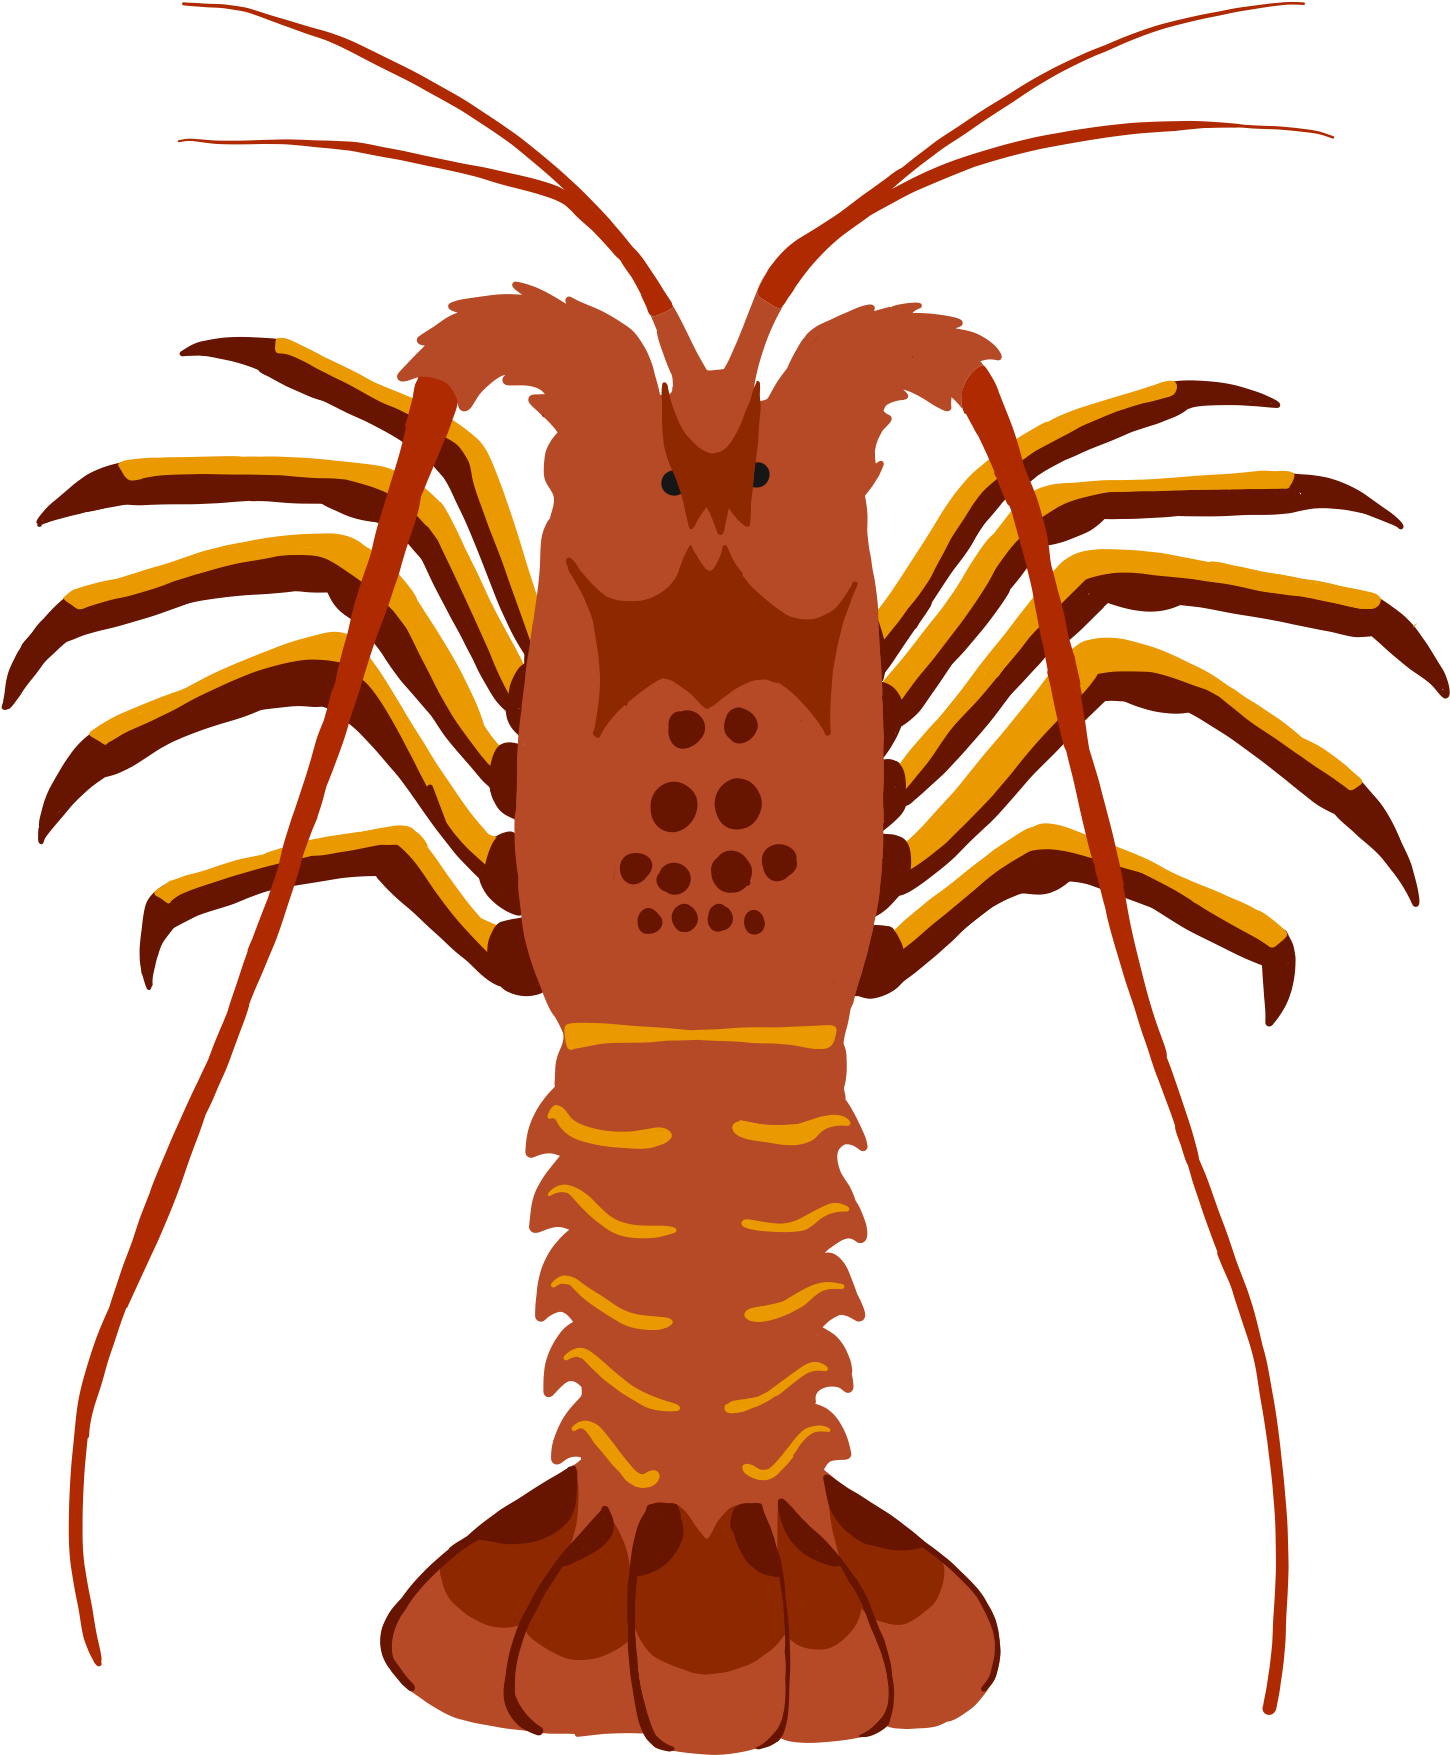 Stylized Lobster Illustration PNG image